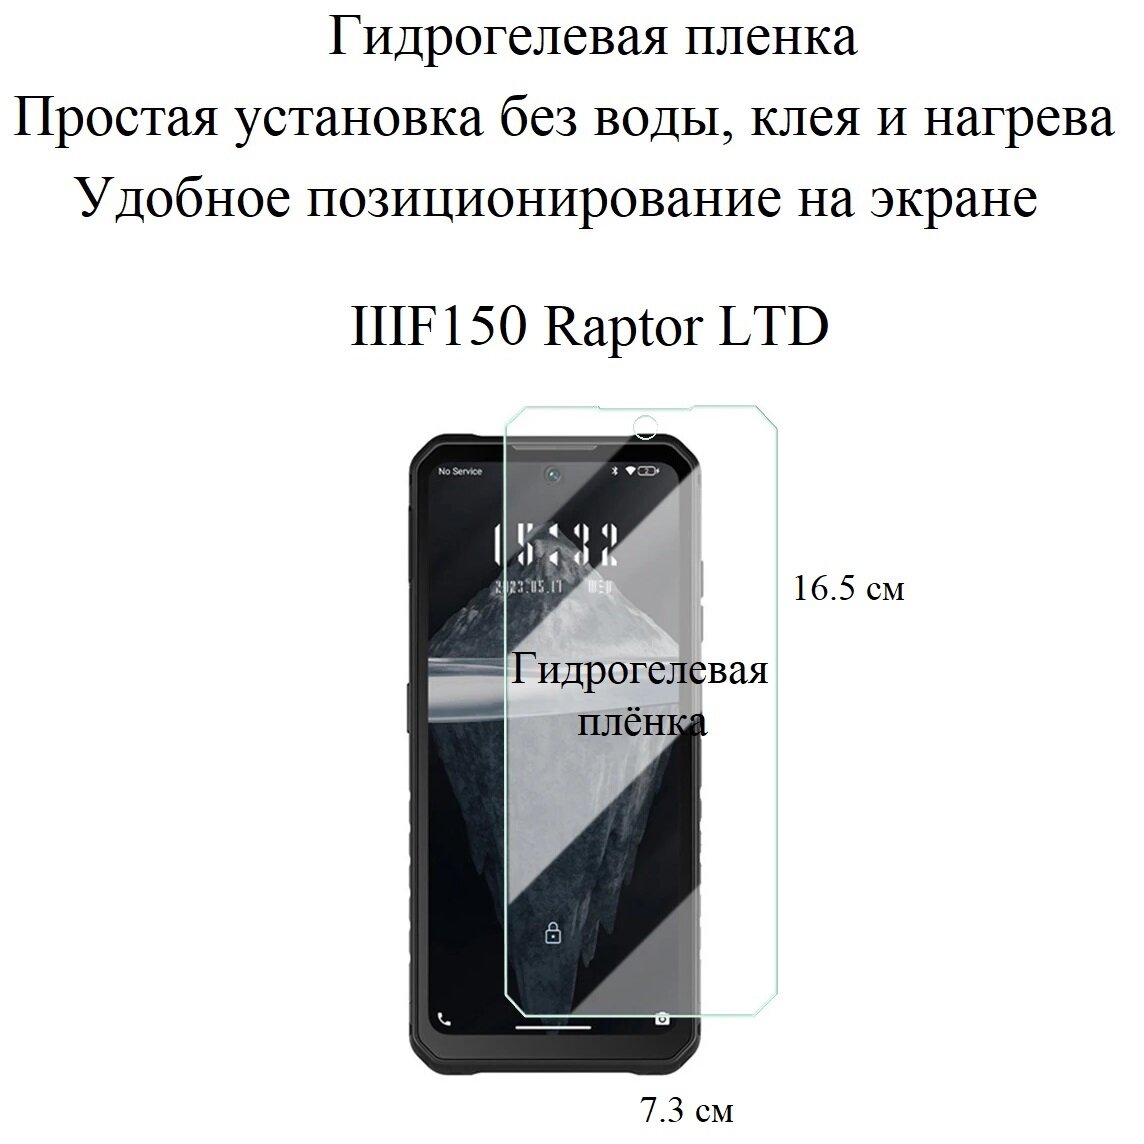 Глянцевая гидрогелевая пленка hoco. на экран смартфона IIIF150 Raptor LTD